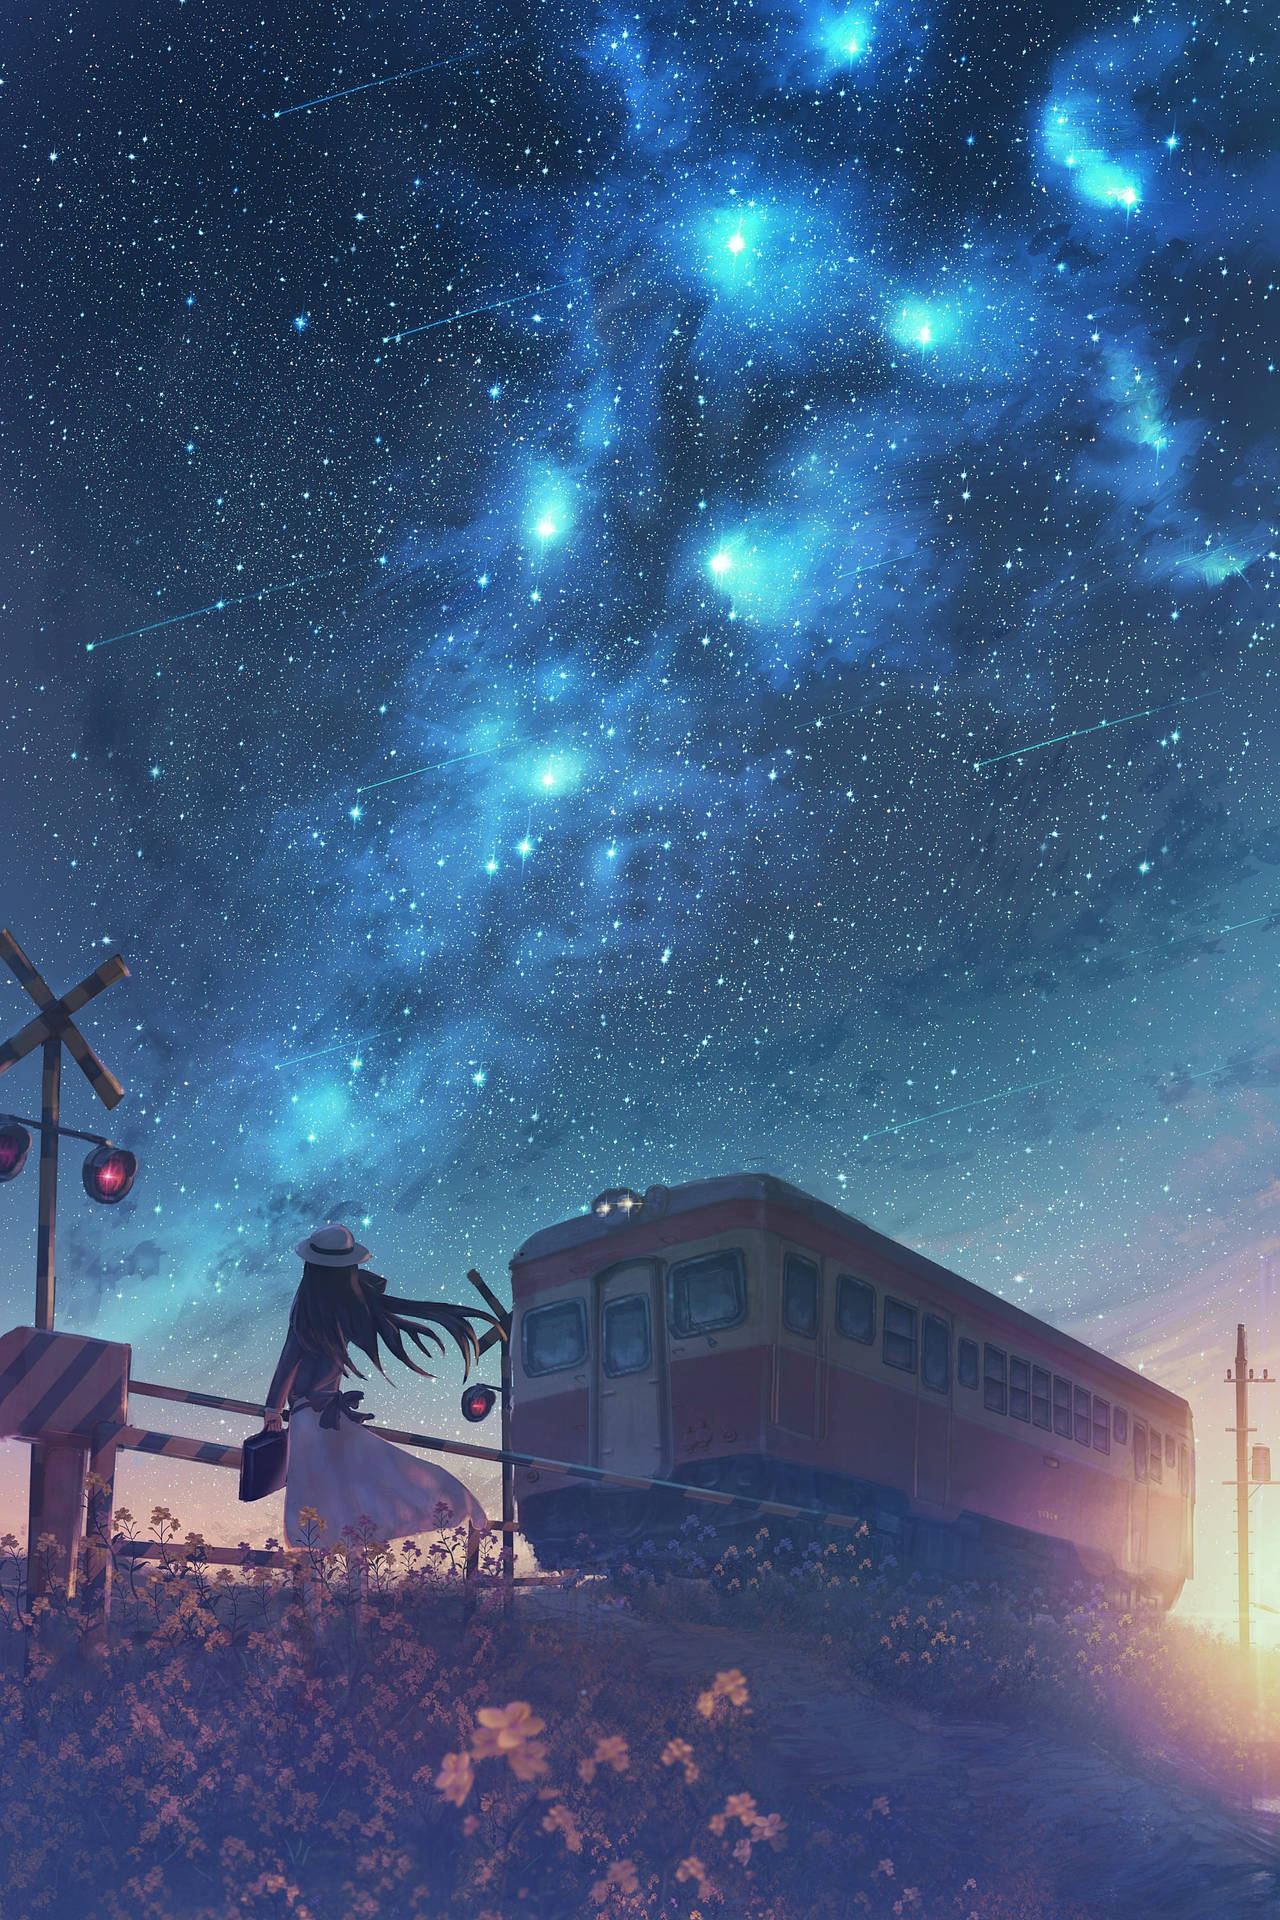 Aesthetic Anime Scenery Of The Night Sky